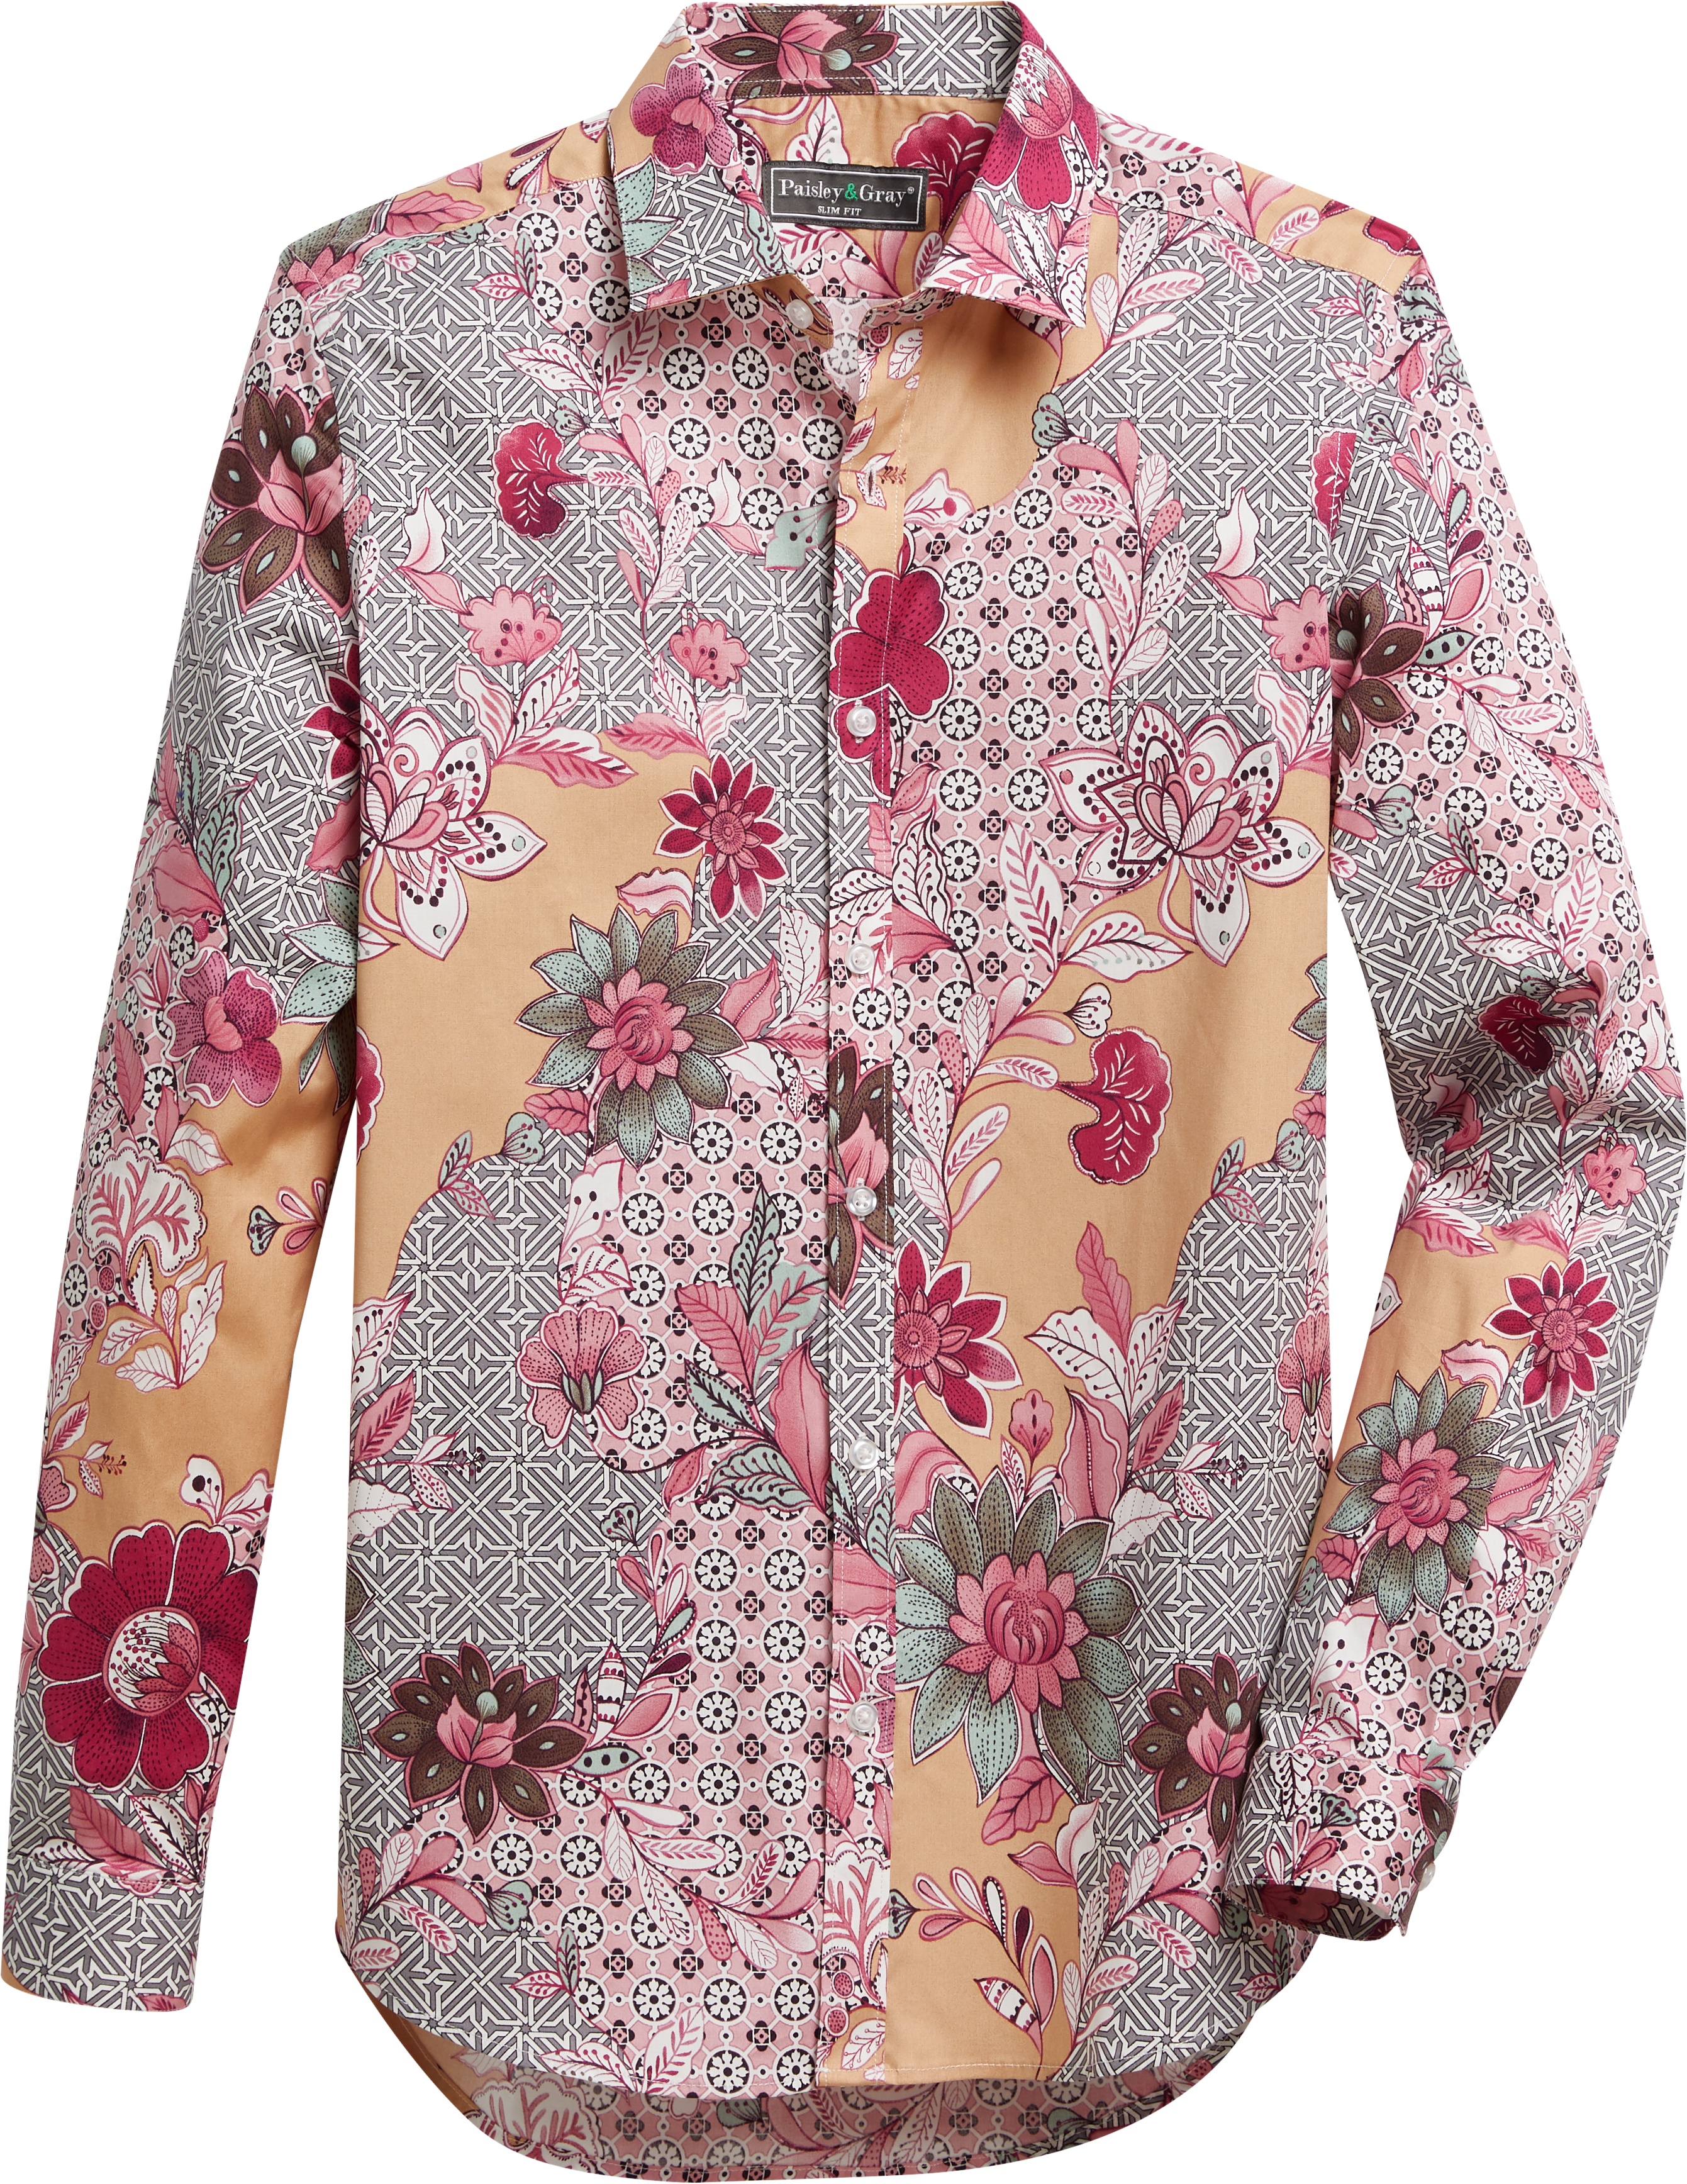 Paisley & Gray Slim Fit Sport Shirt, Rosewood Floral Print - Men's Sale ...